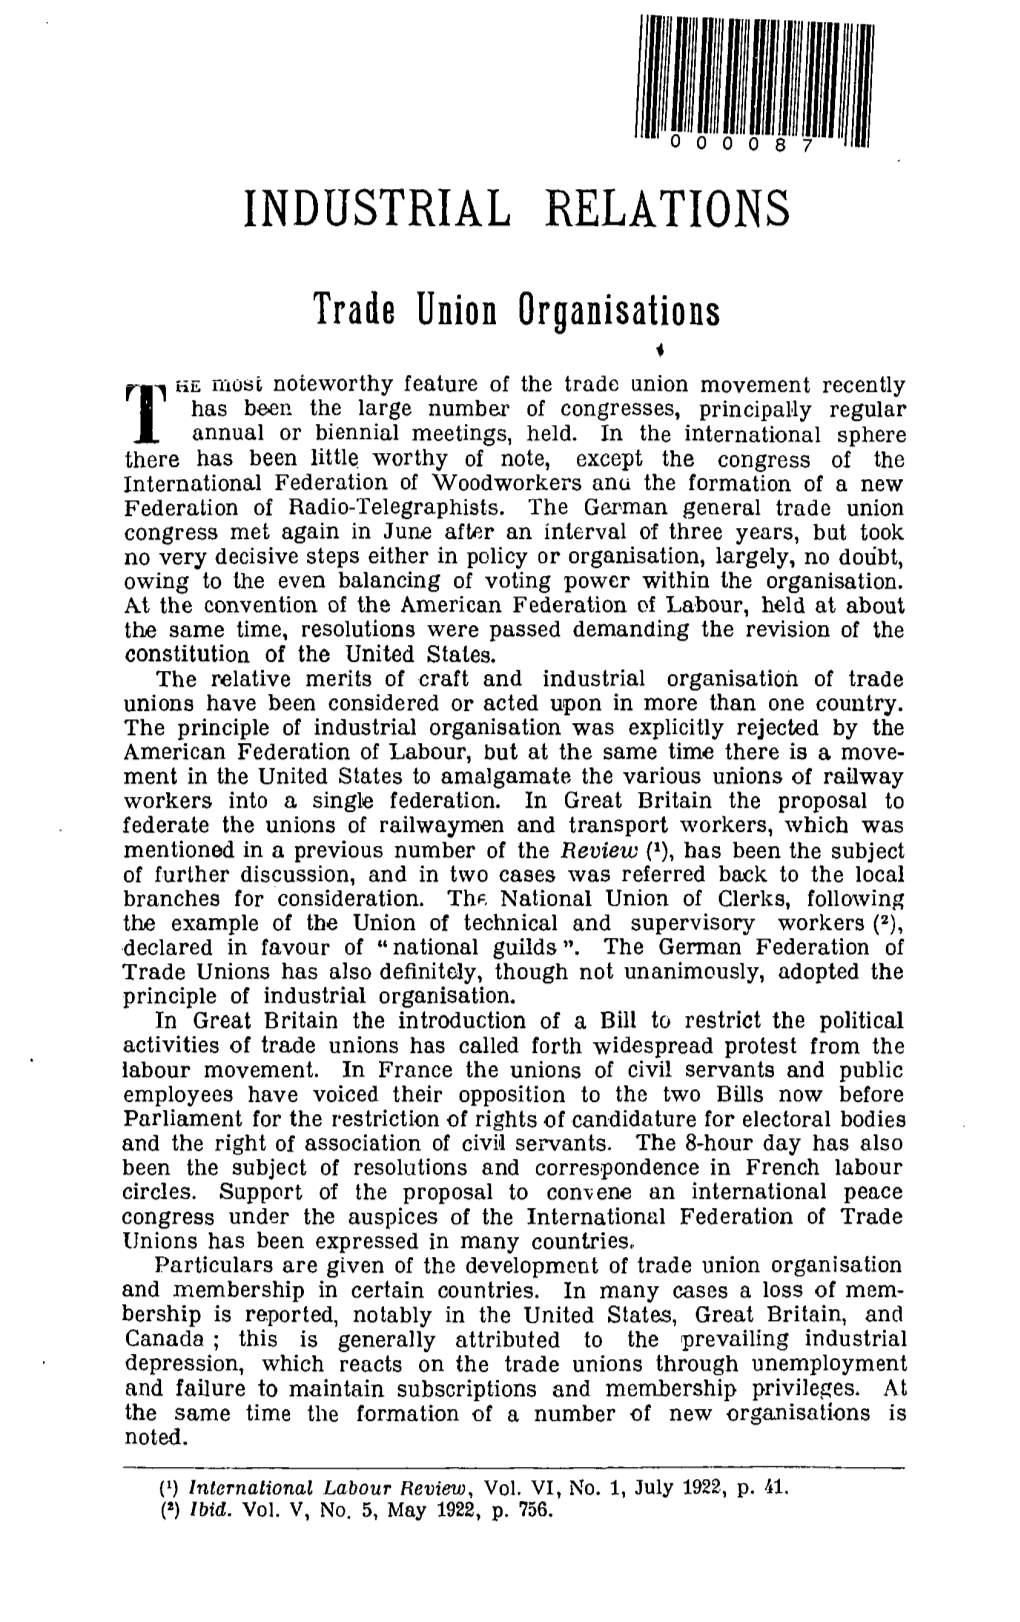 1922 Vol. 6 (3), Pp. 375-507